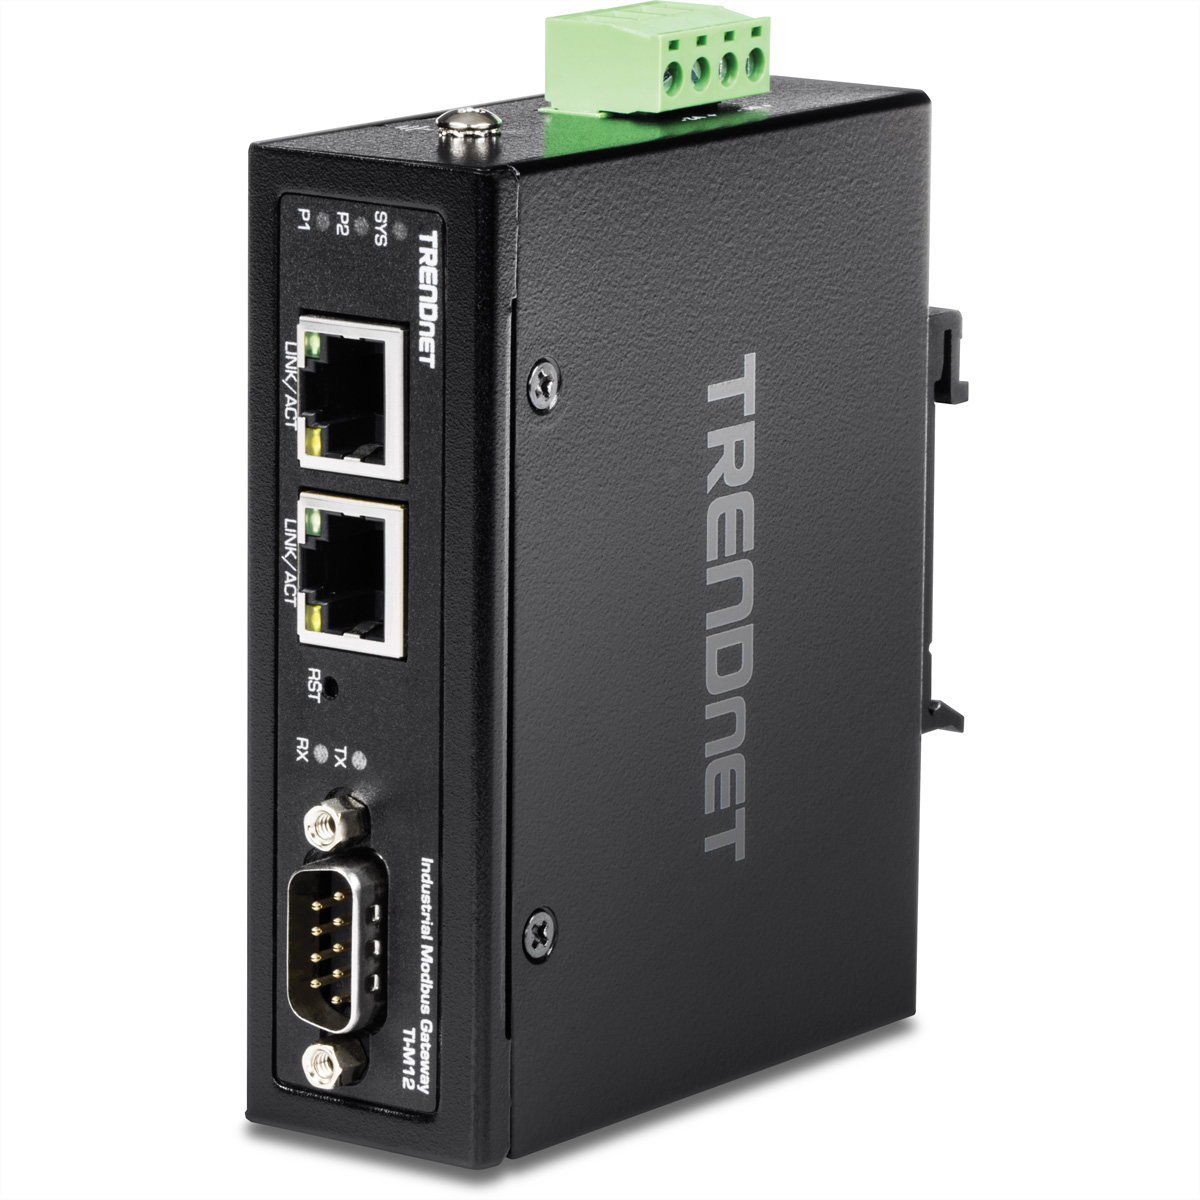 Modbus TRENDNET Switch Industrial TI-M12 Ethernet Gateway Fast